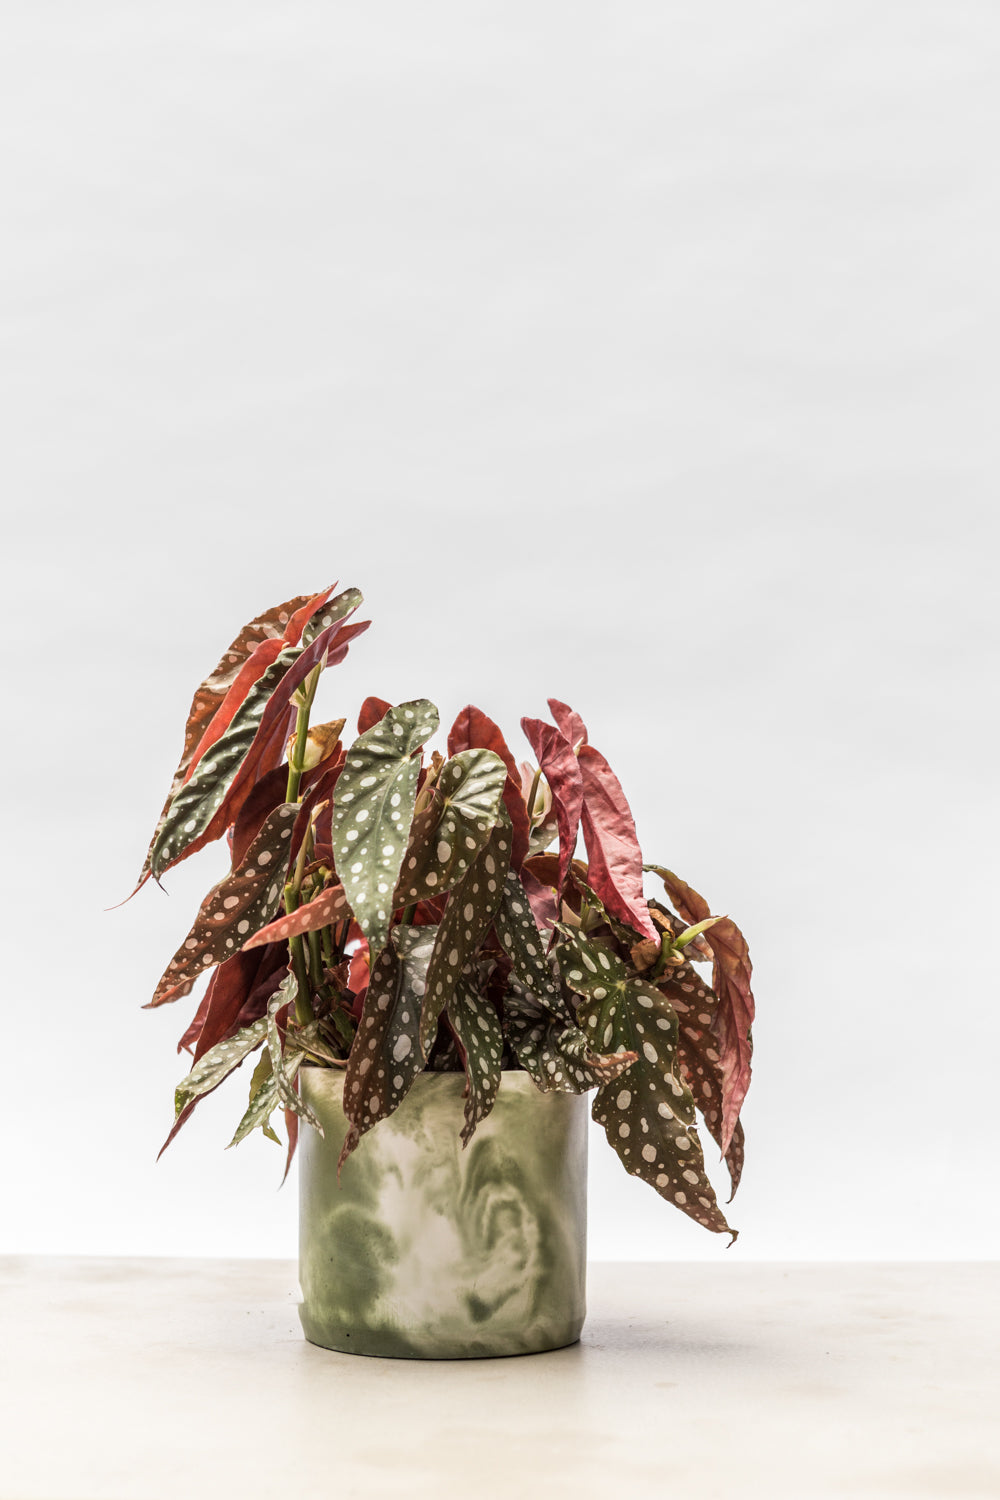 Polkadot Begonia / Angel Wing Plant